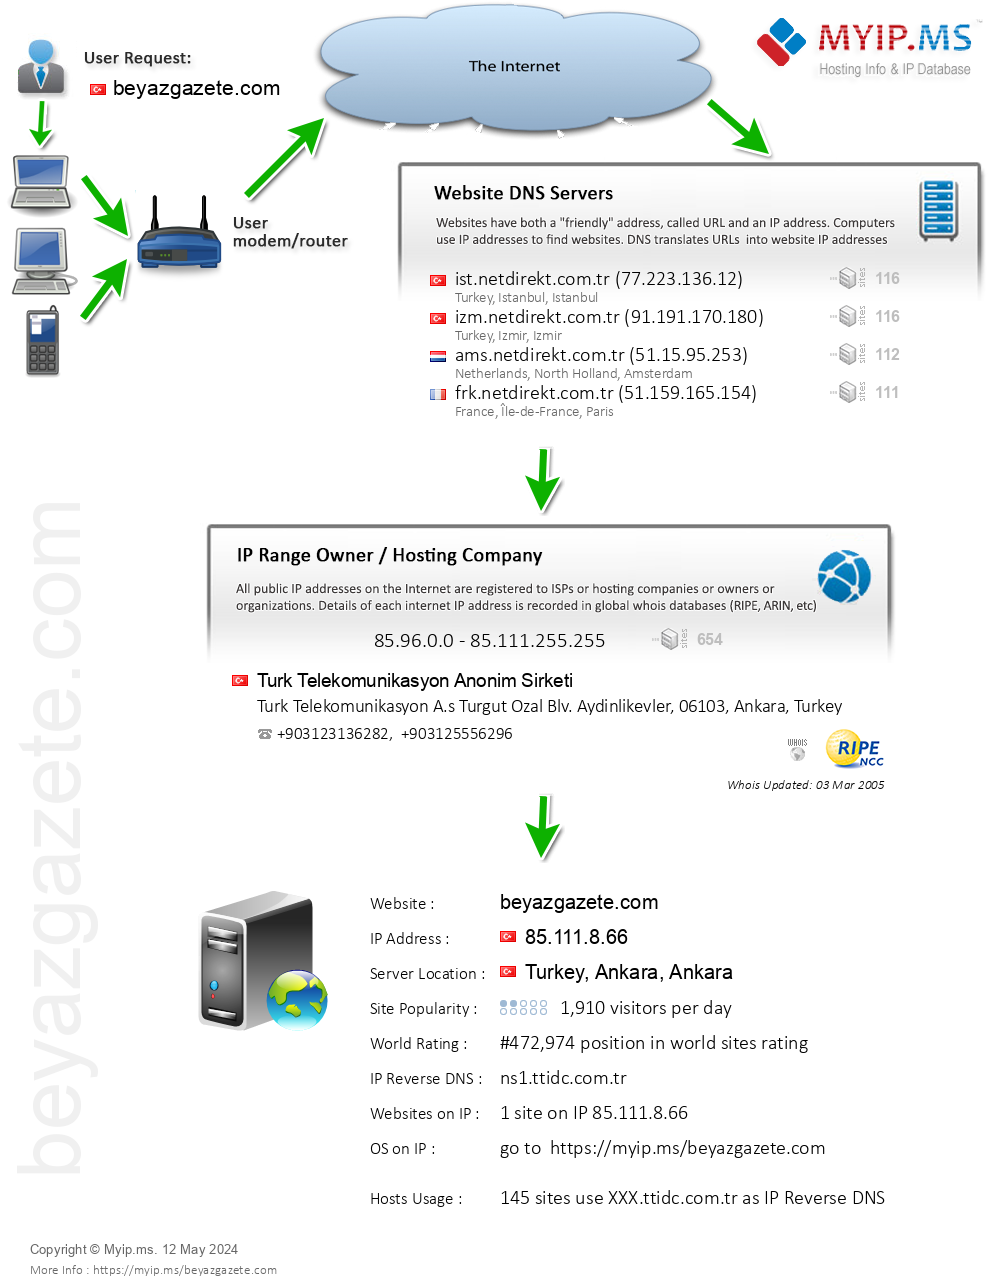 Beyazgazete.com - Website Hosting Visual IP Diagram